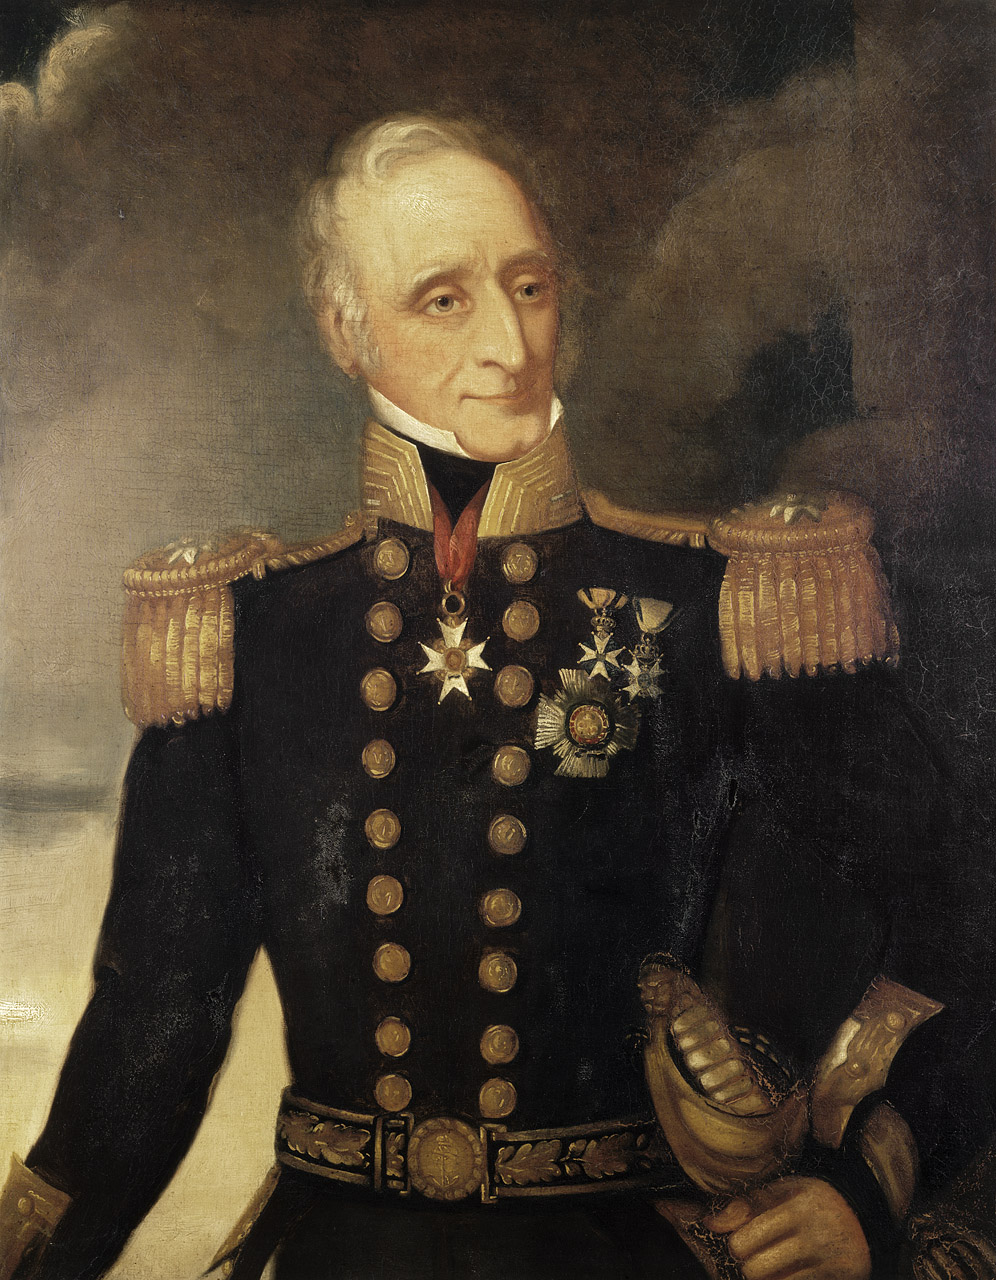 Portrait of Thomas Baker wearing a naval uniform.